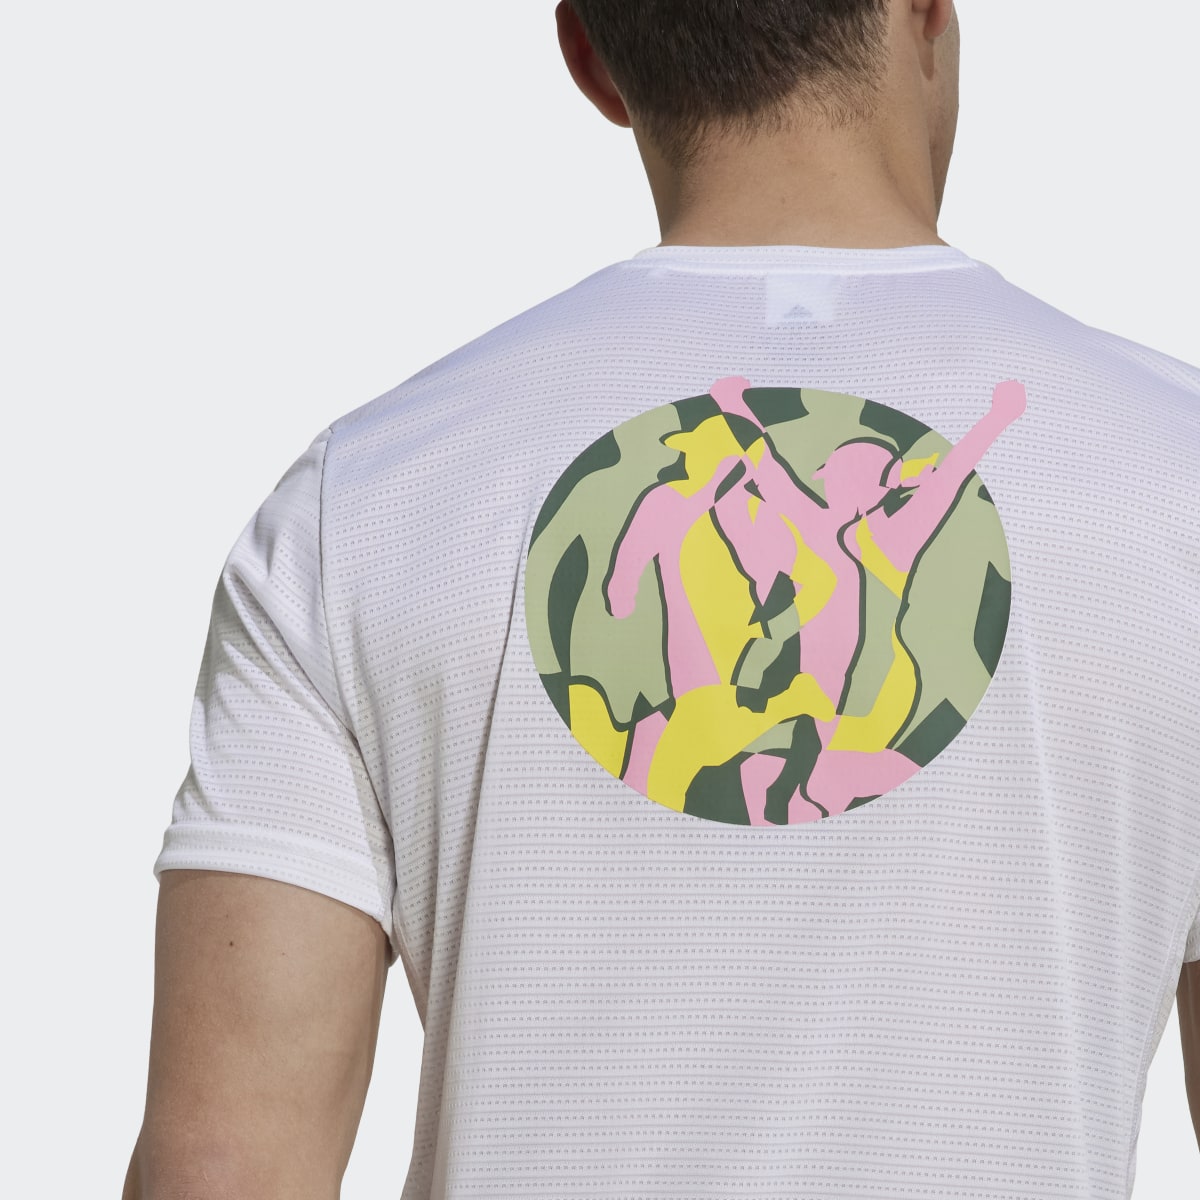 Adidas Berlin Marathon 2022 T-Shirt. 7